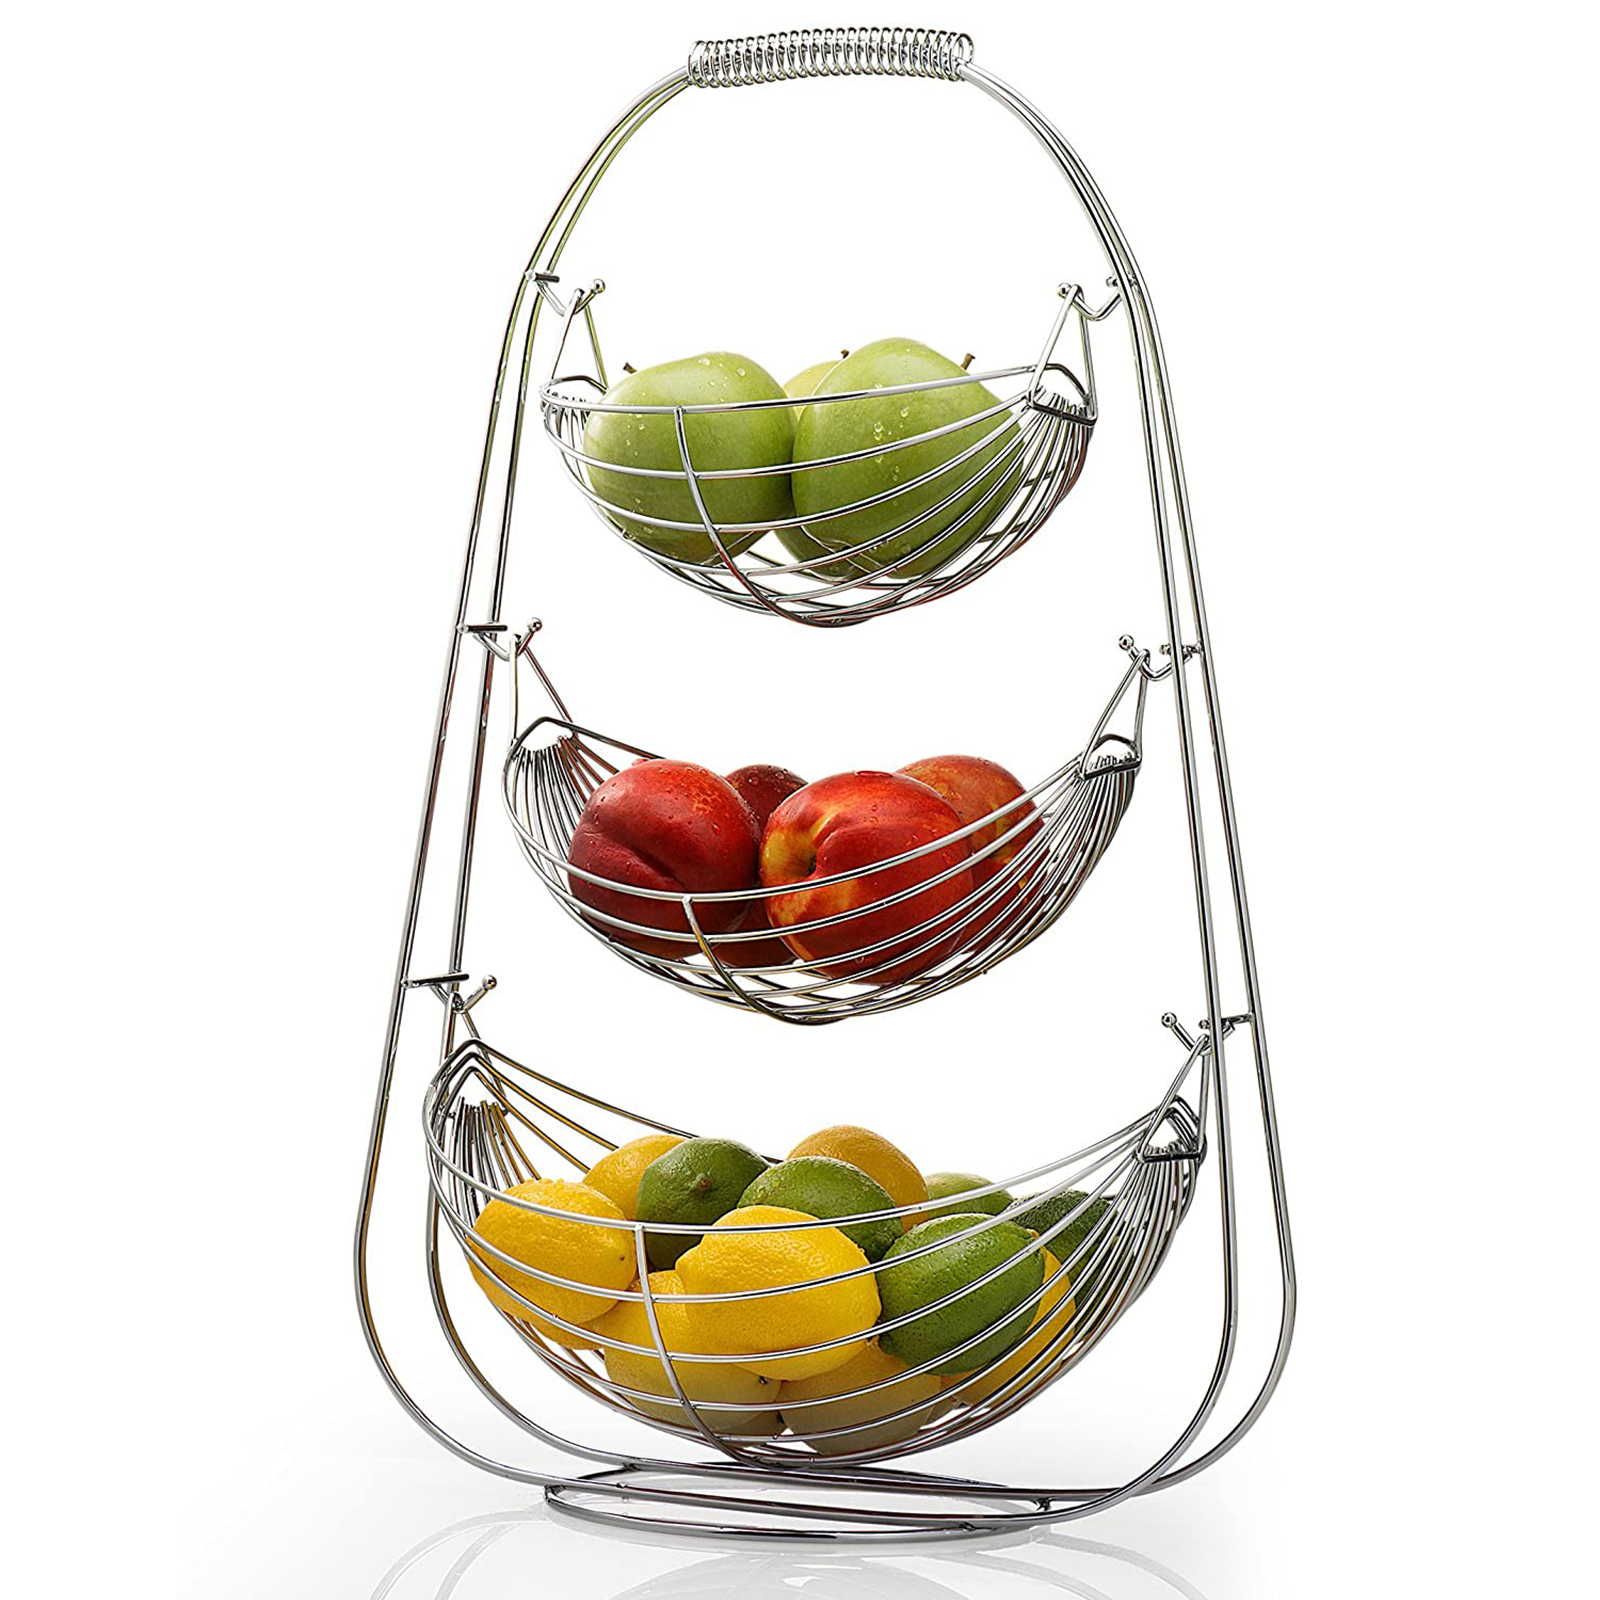 3 Tier Fruit Basket